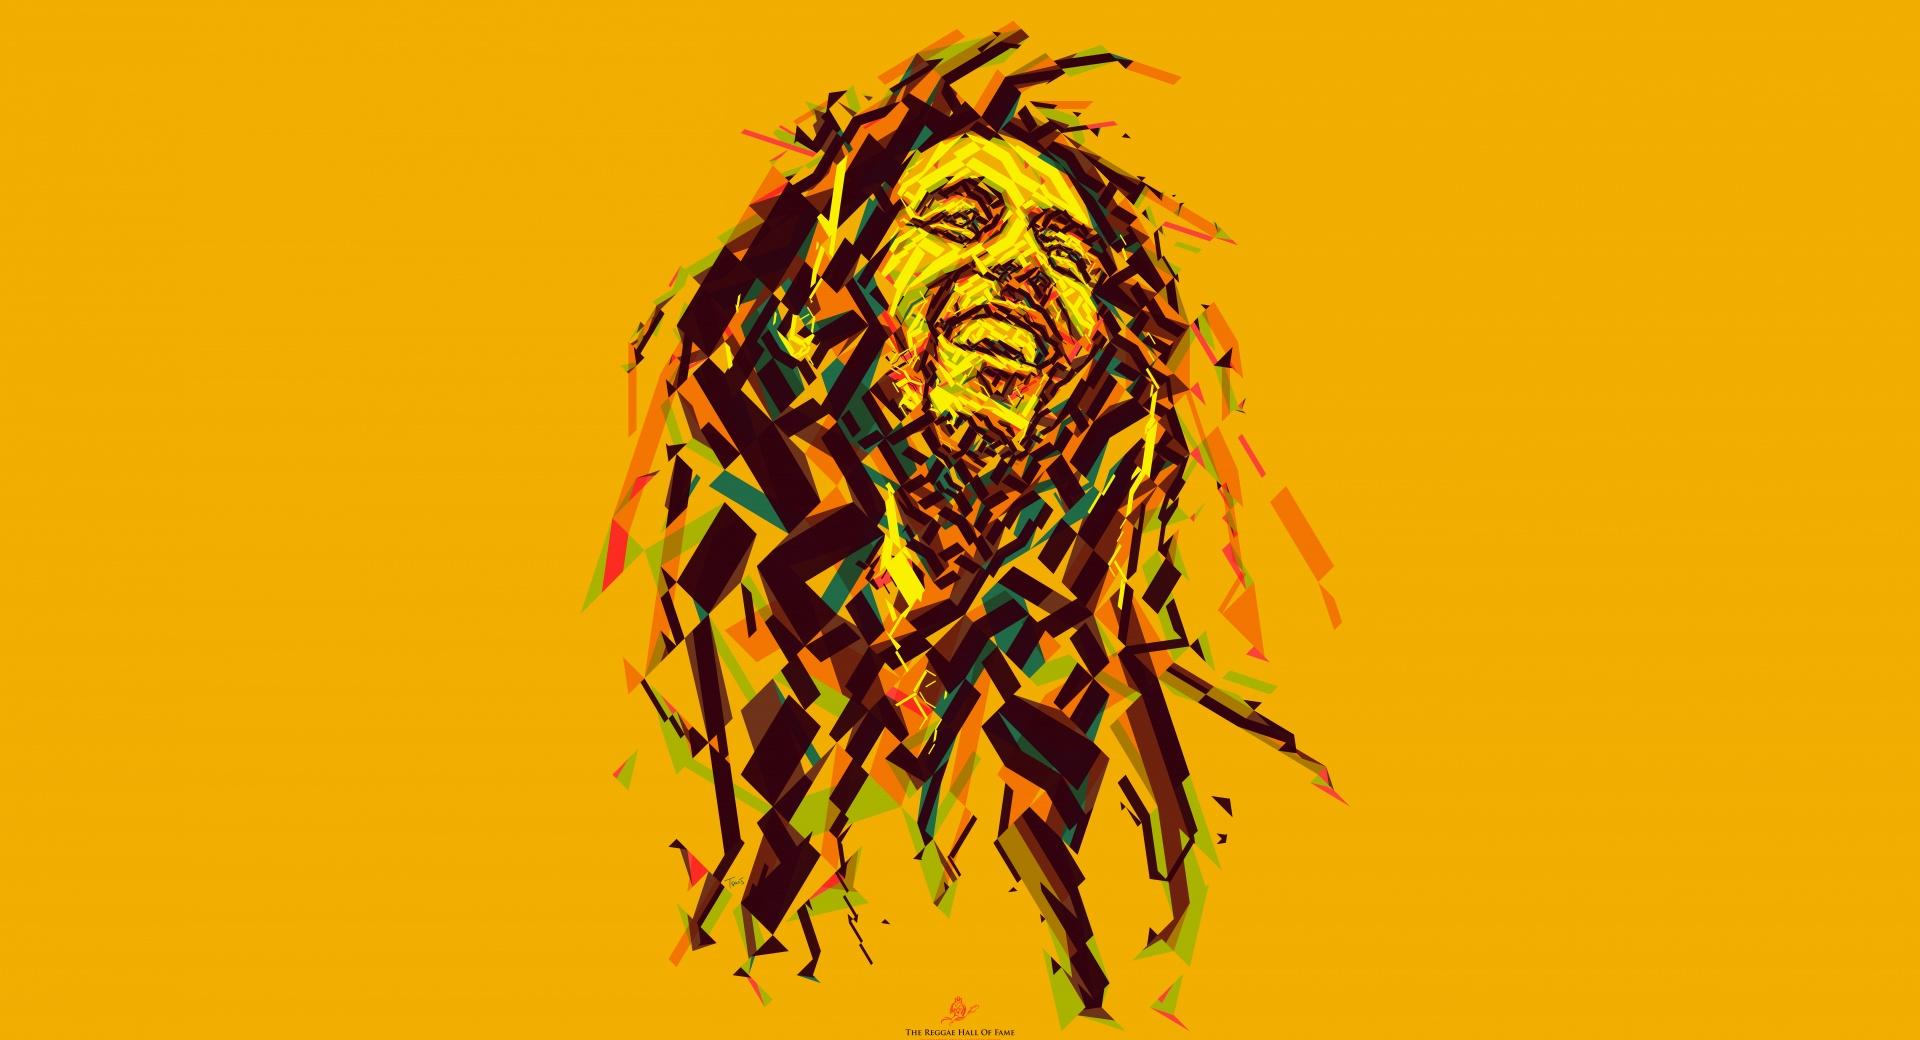 Bob Marley at 2048 x 2048 iPad size wallpapers HD quality